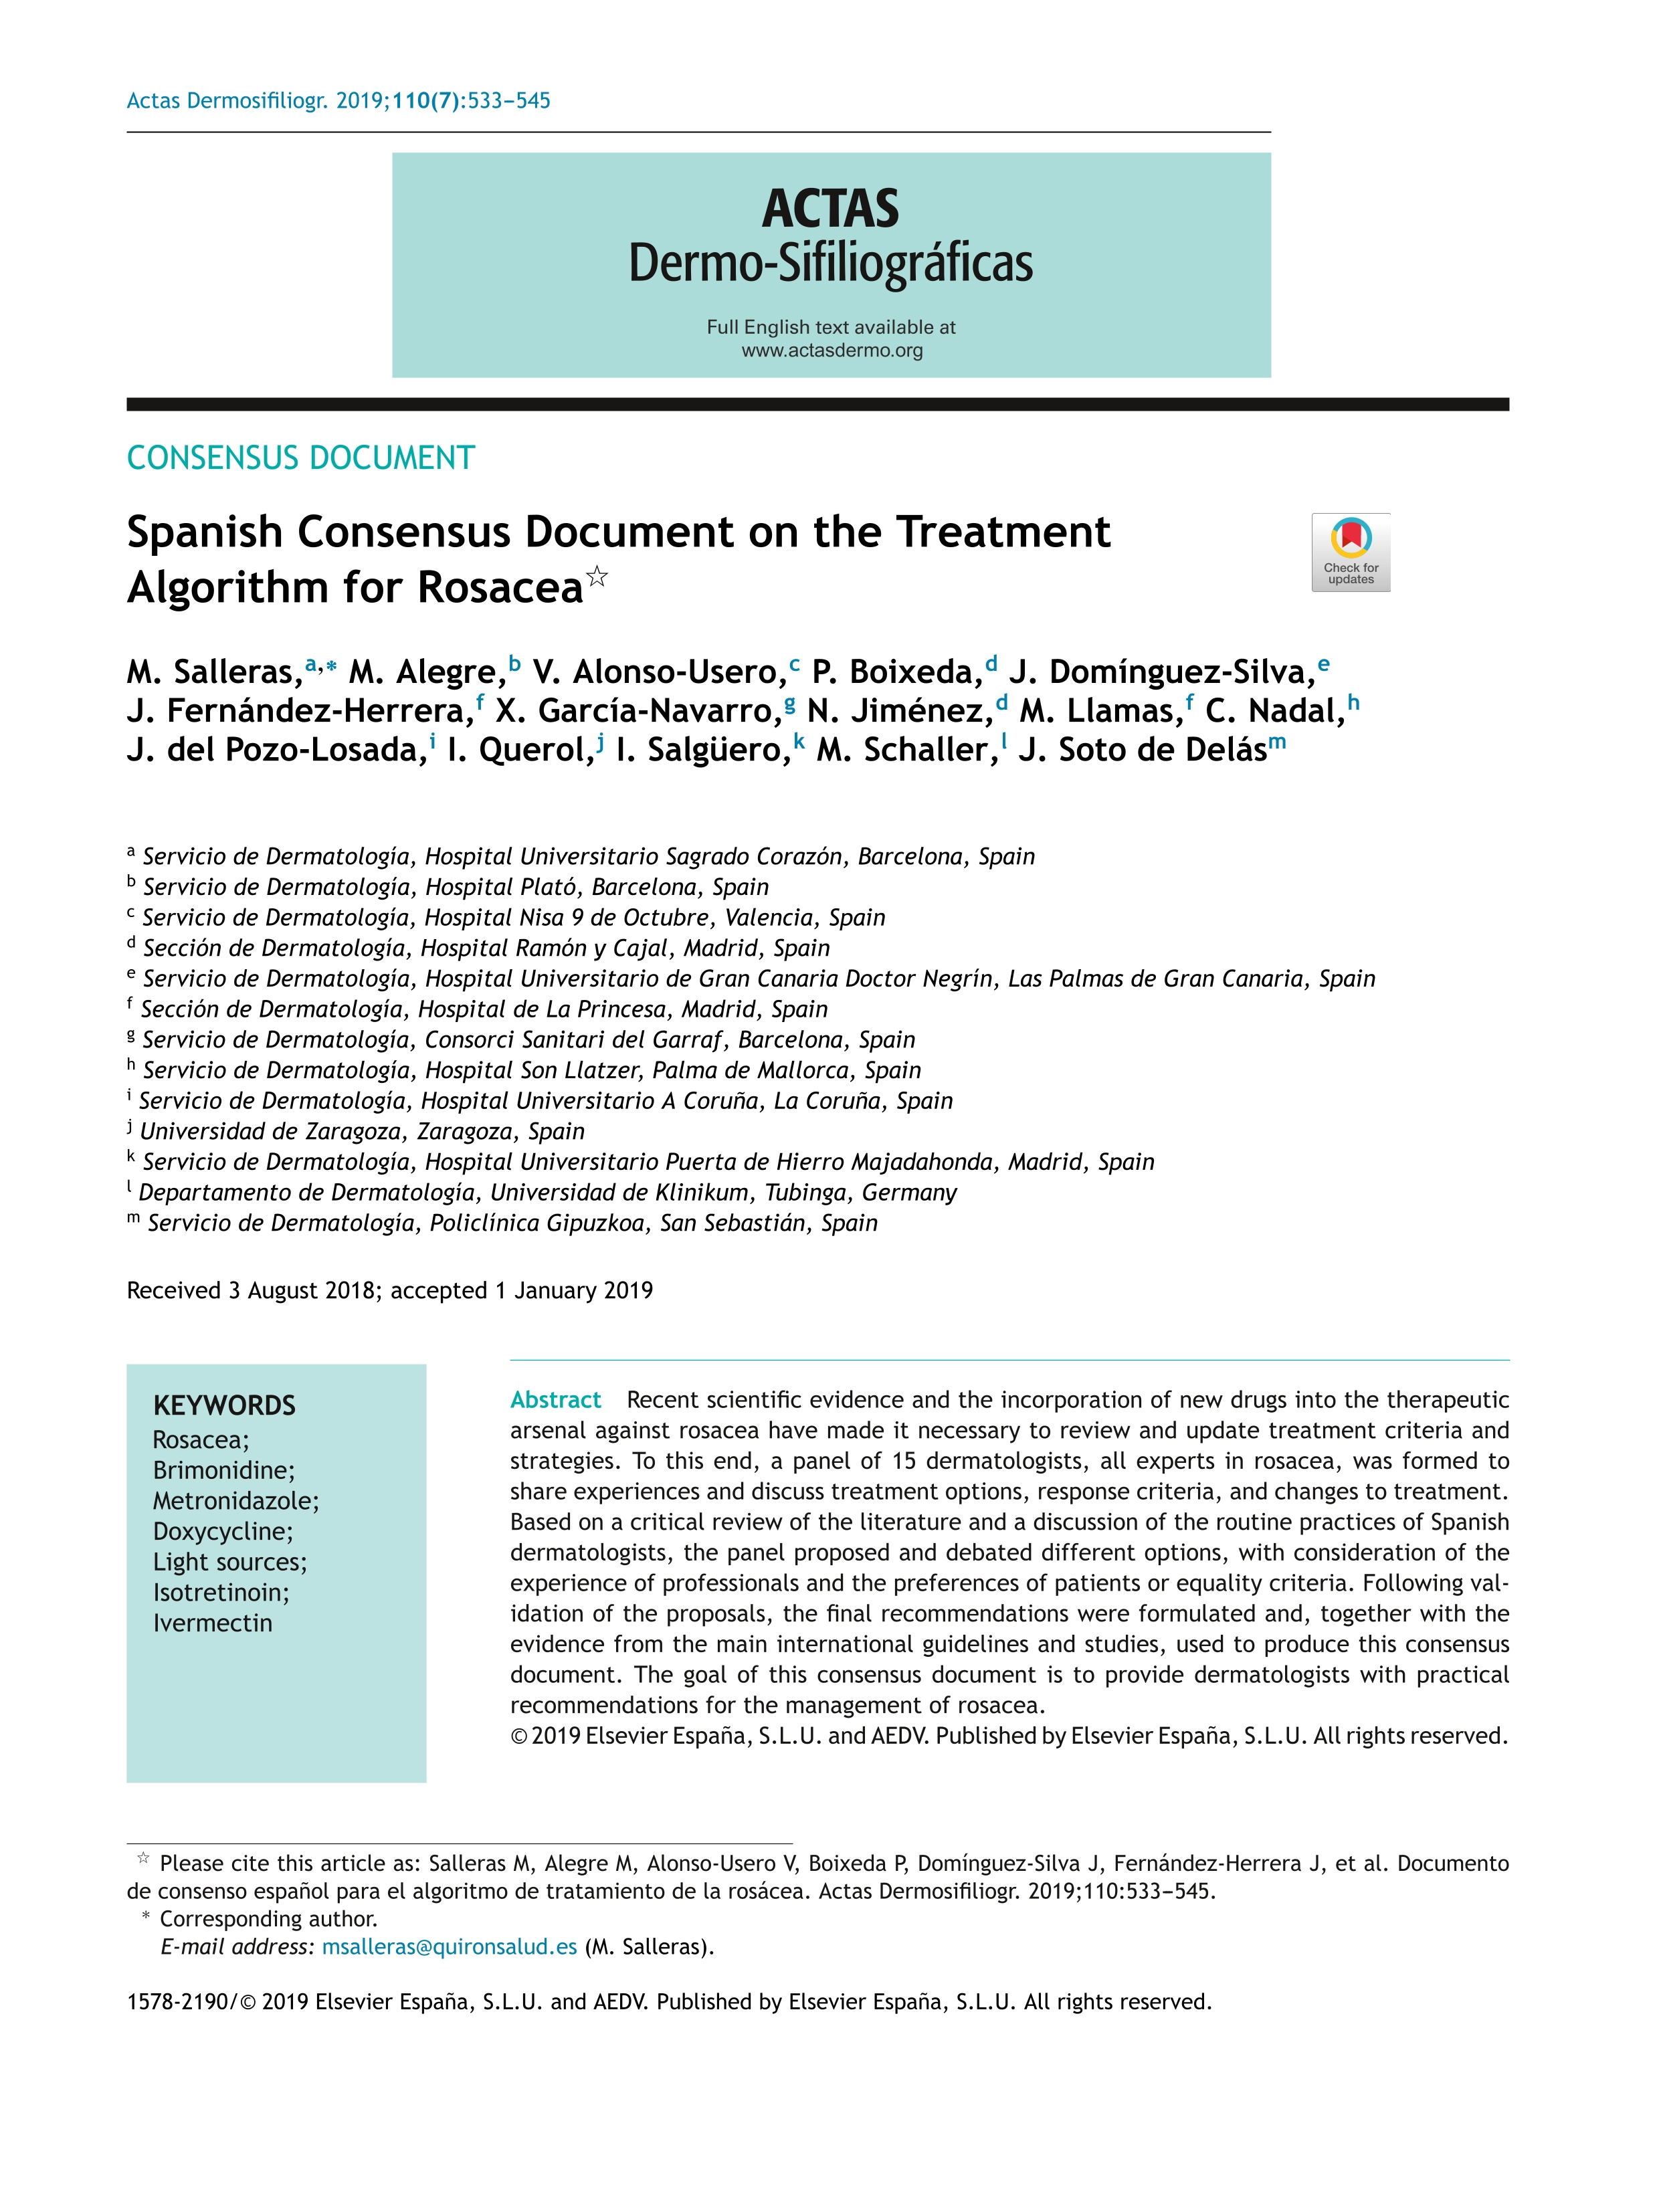 Spanish Consensus Document on the Treatment Algorithm for Rosacea